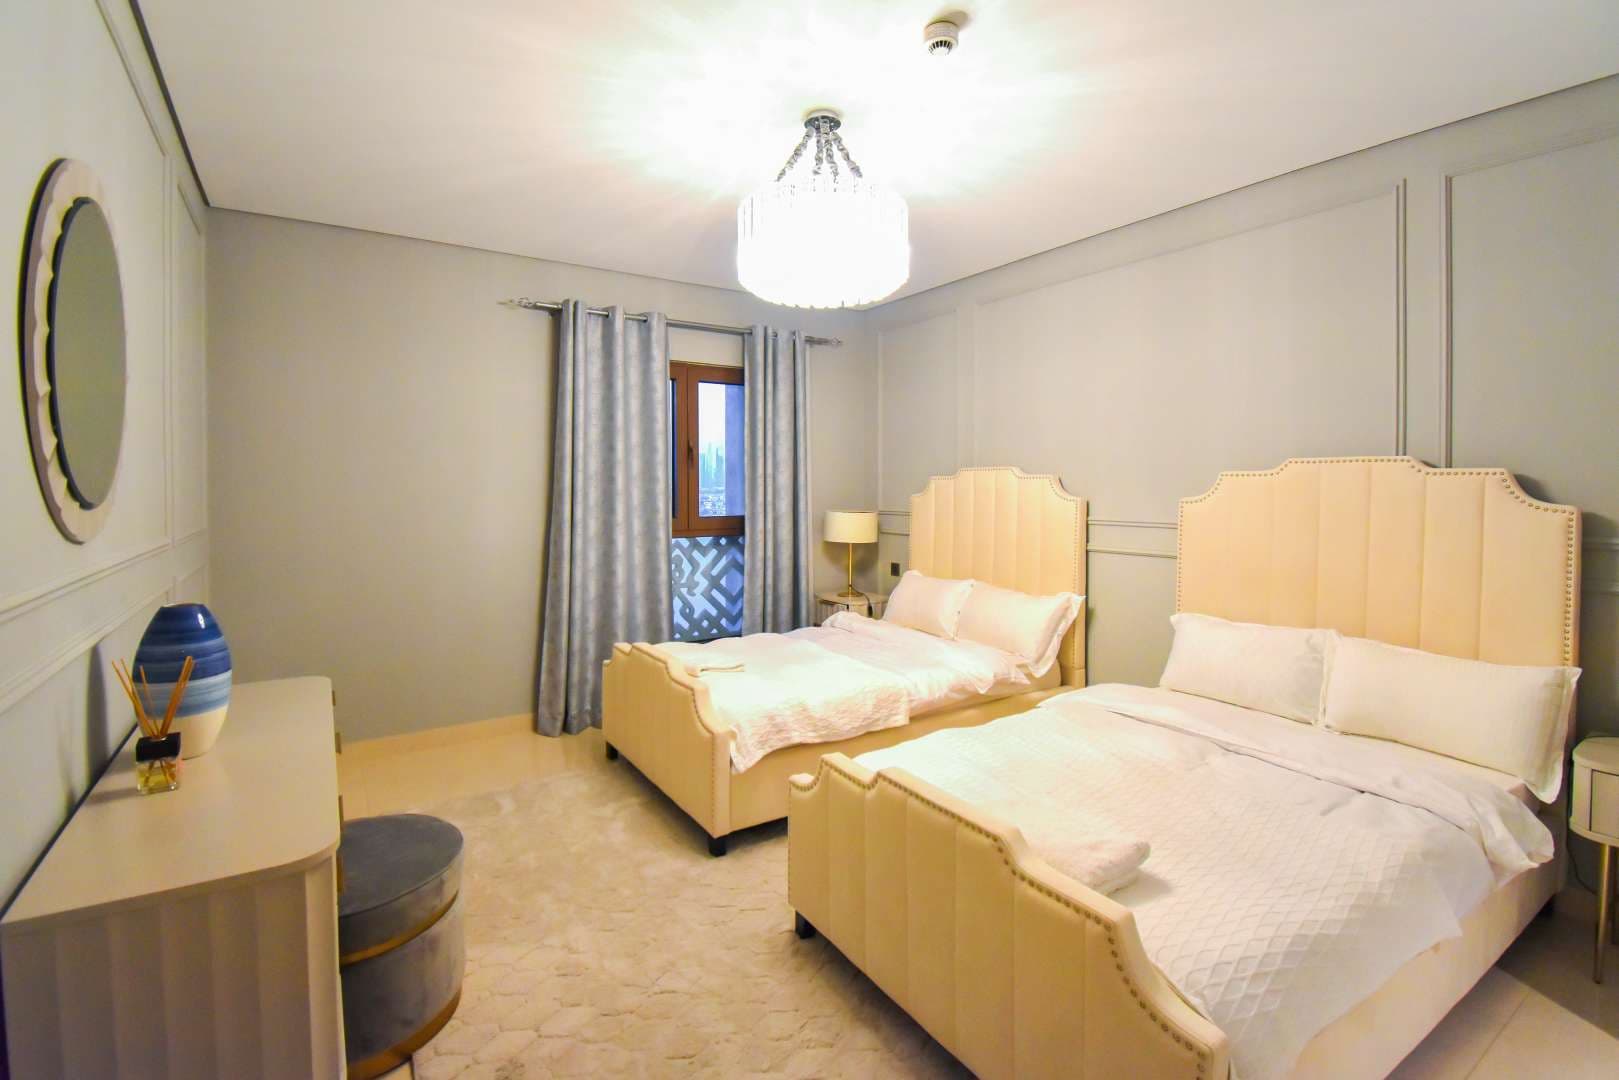 2 Bedroom Apartment For Sale Kingdom Of Sheba Lp10847 270b485f24f4e400.jpg